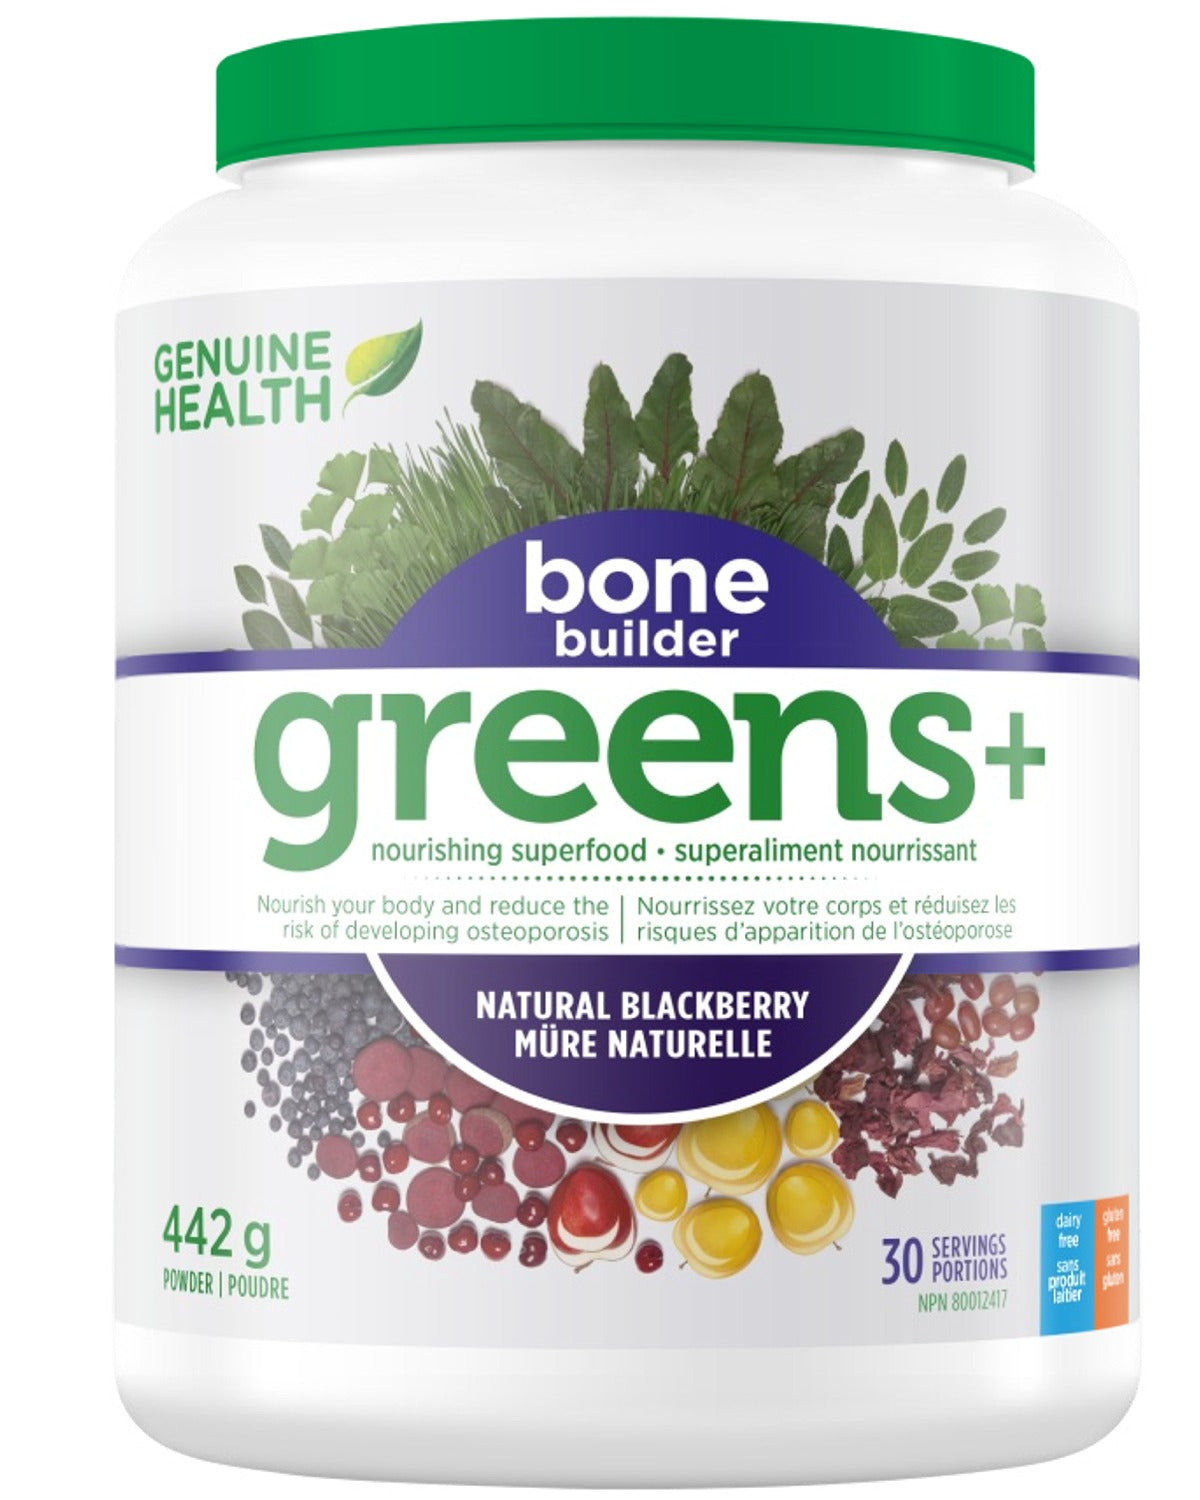 GENUINE HEALTH Greens+ Bone Builder (Blackberry 442 g)